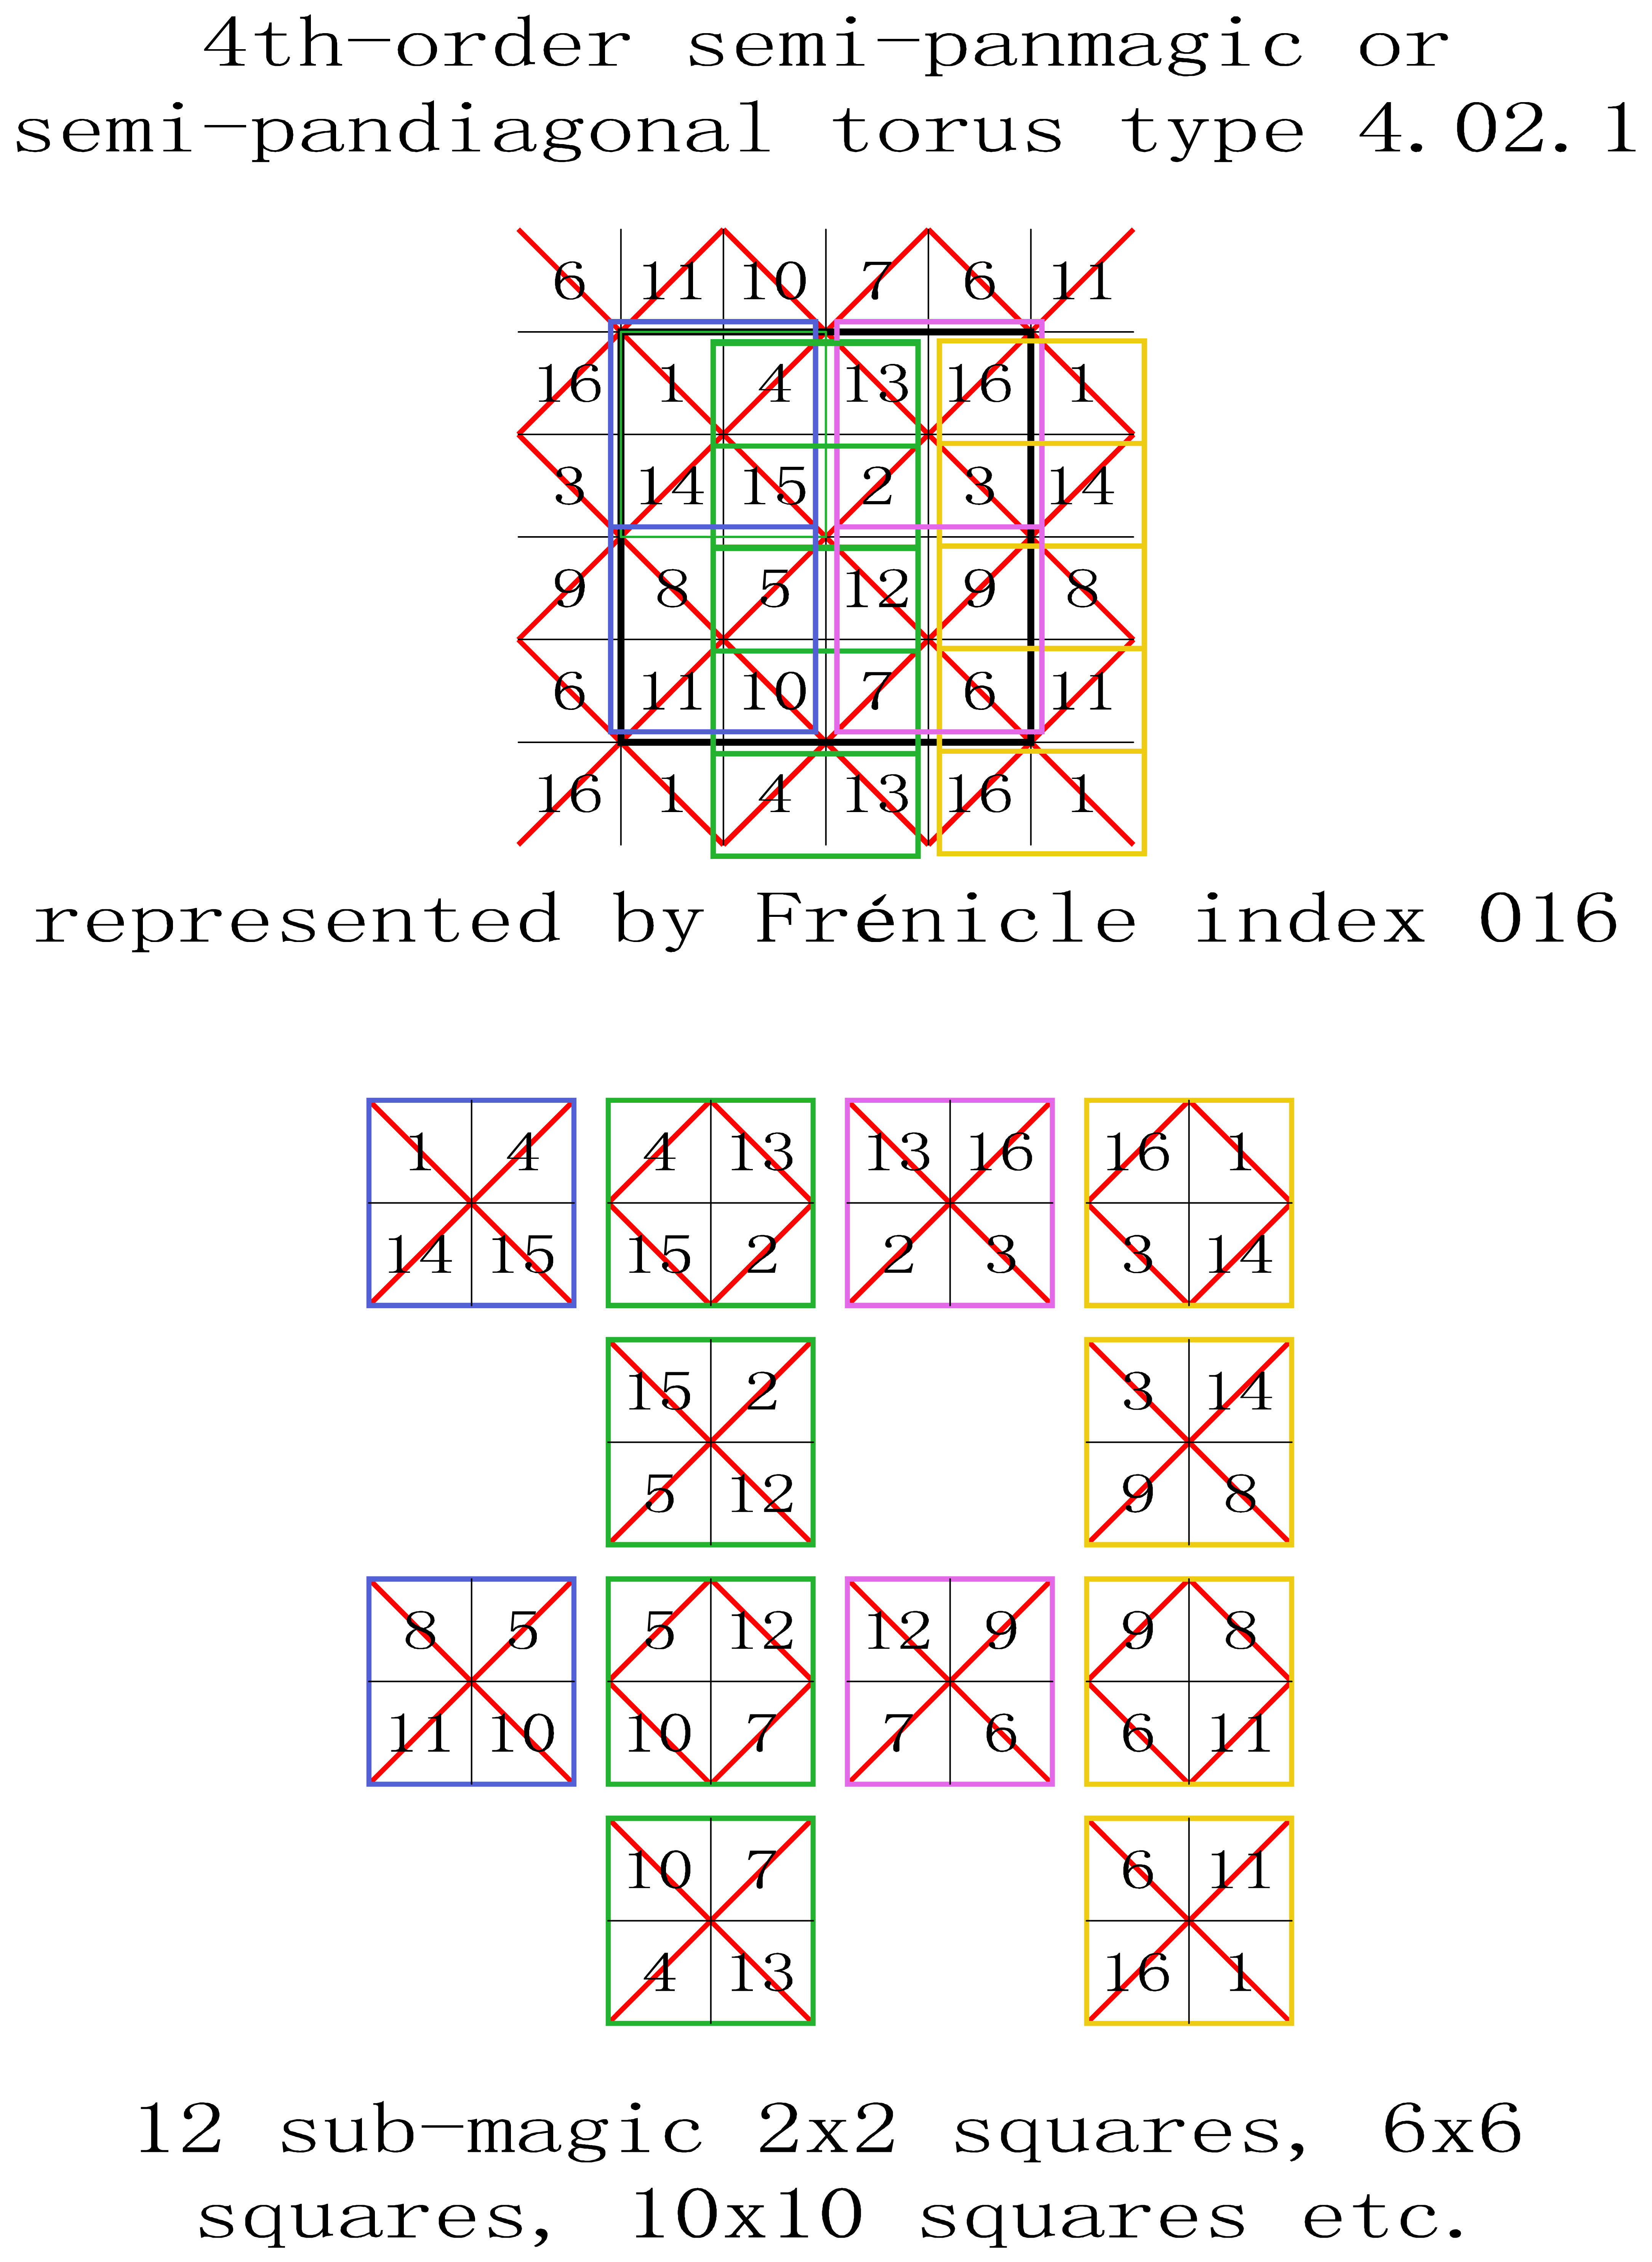 order 4 semi-pandiagonal magic torus type T4.02.1 sub-magic 2x2 squares